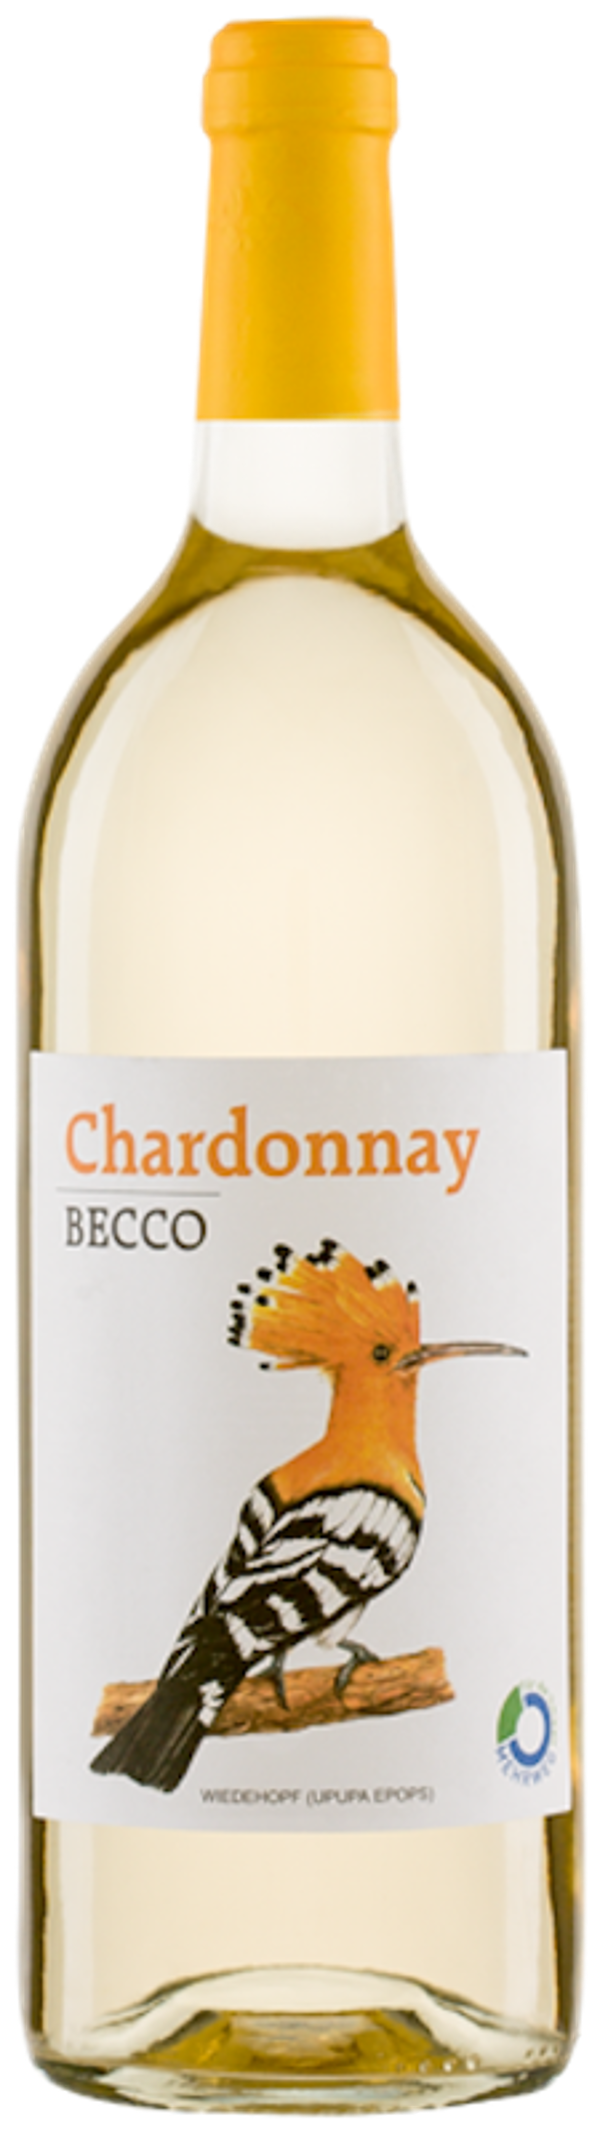 Produktfoto zu BECCO Chardonnay 2021_2022 1l